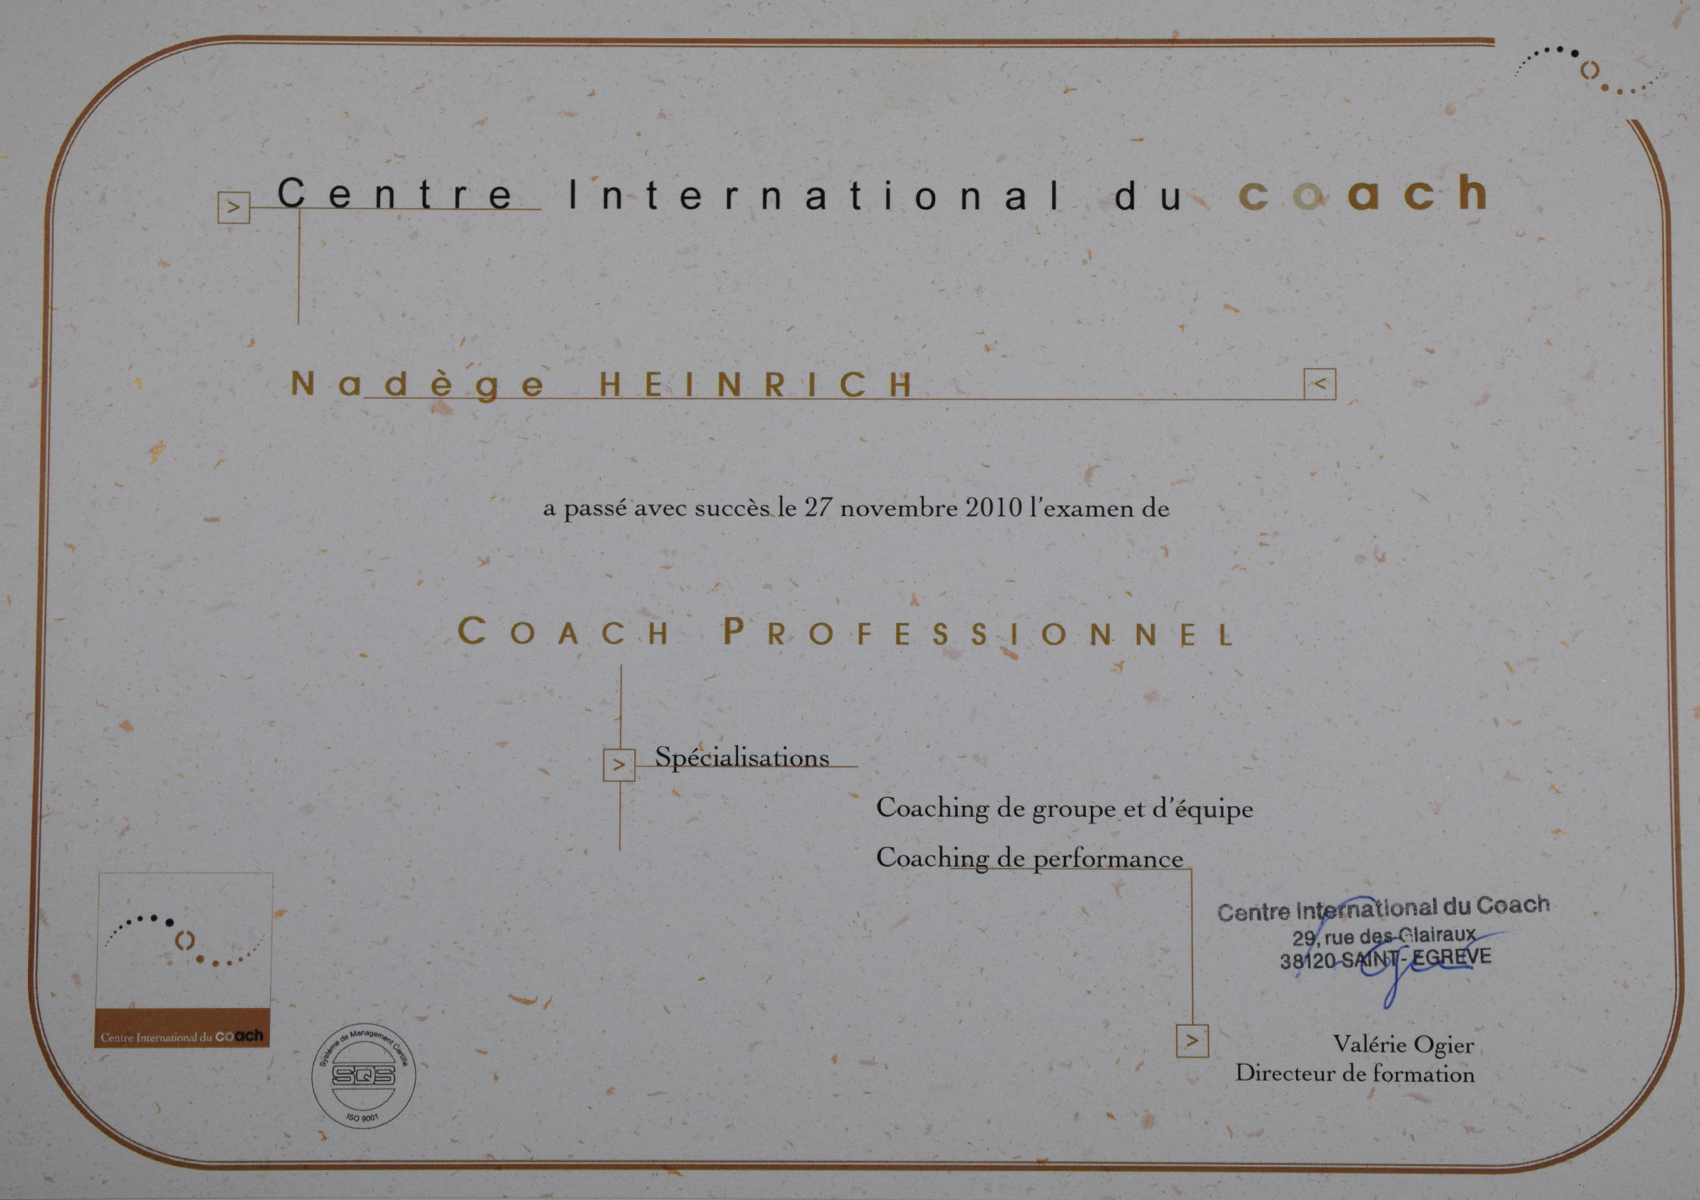 Coach Professionnel Nadege HEINRICH